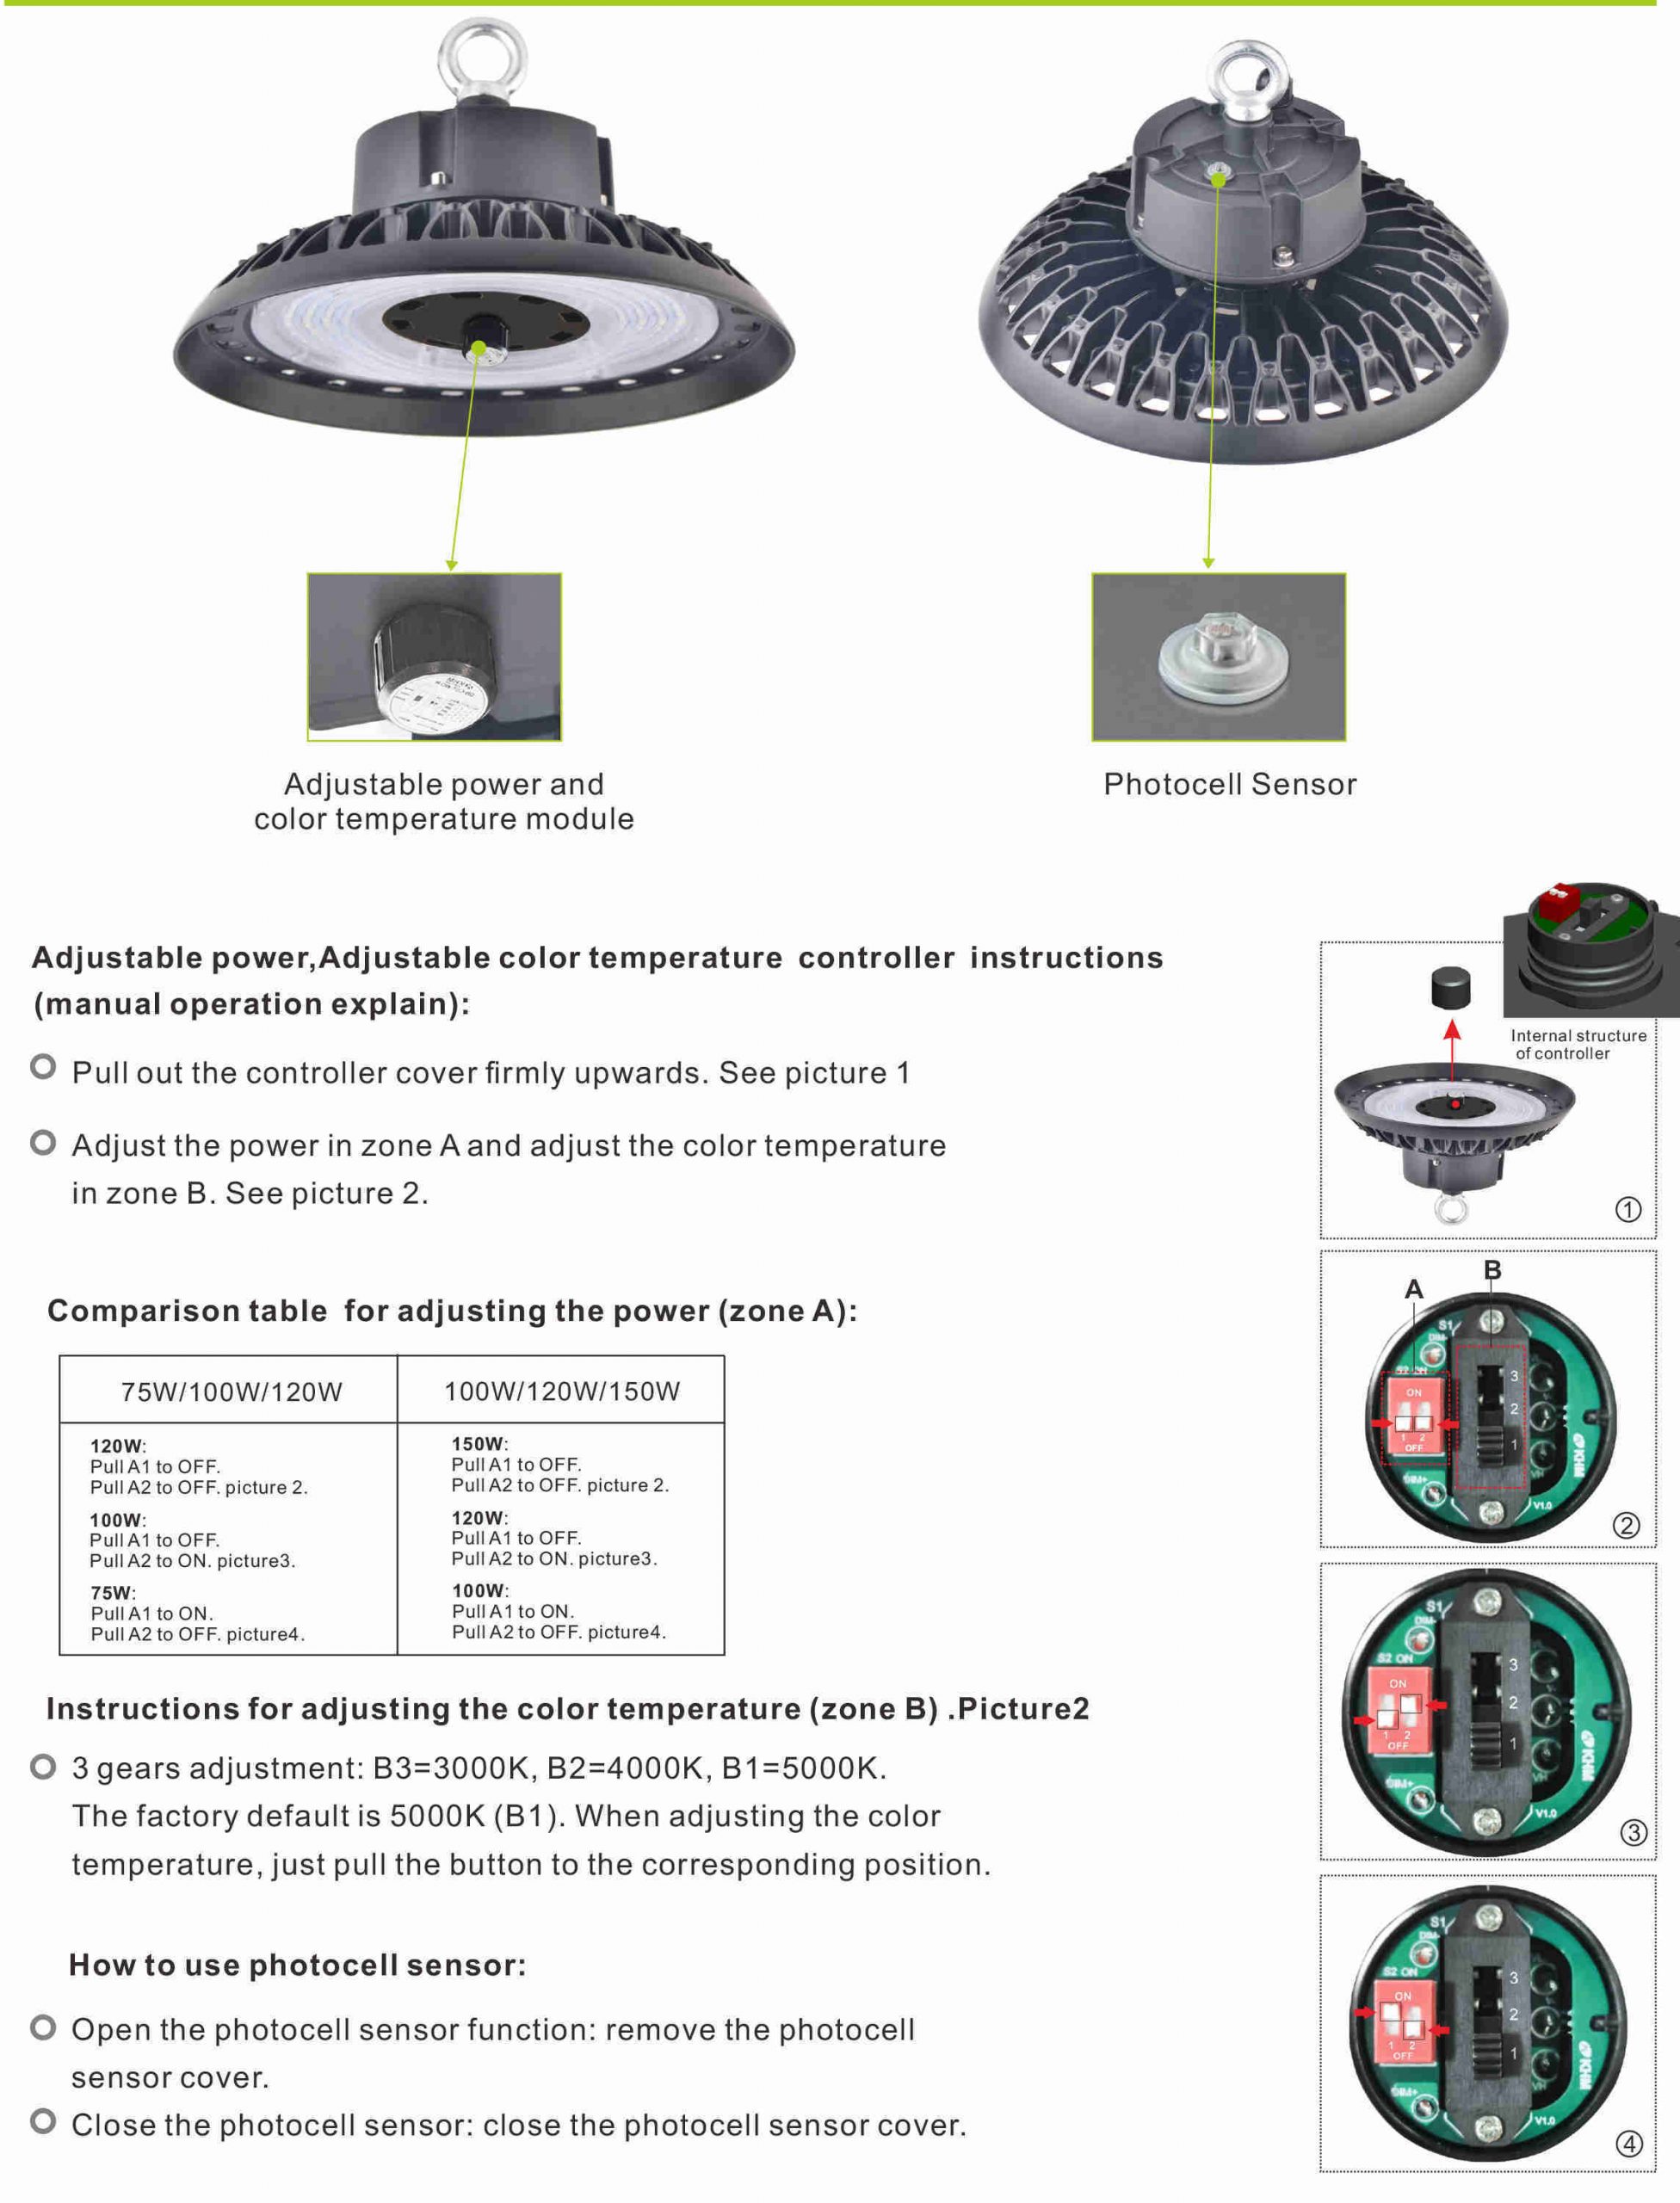 UFO High Bay LED Adjustable 100W 120W 150W IP67 with 100-277VAC